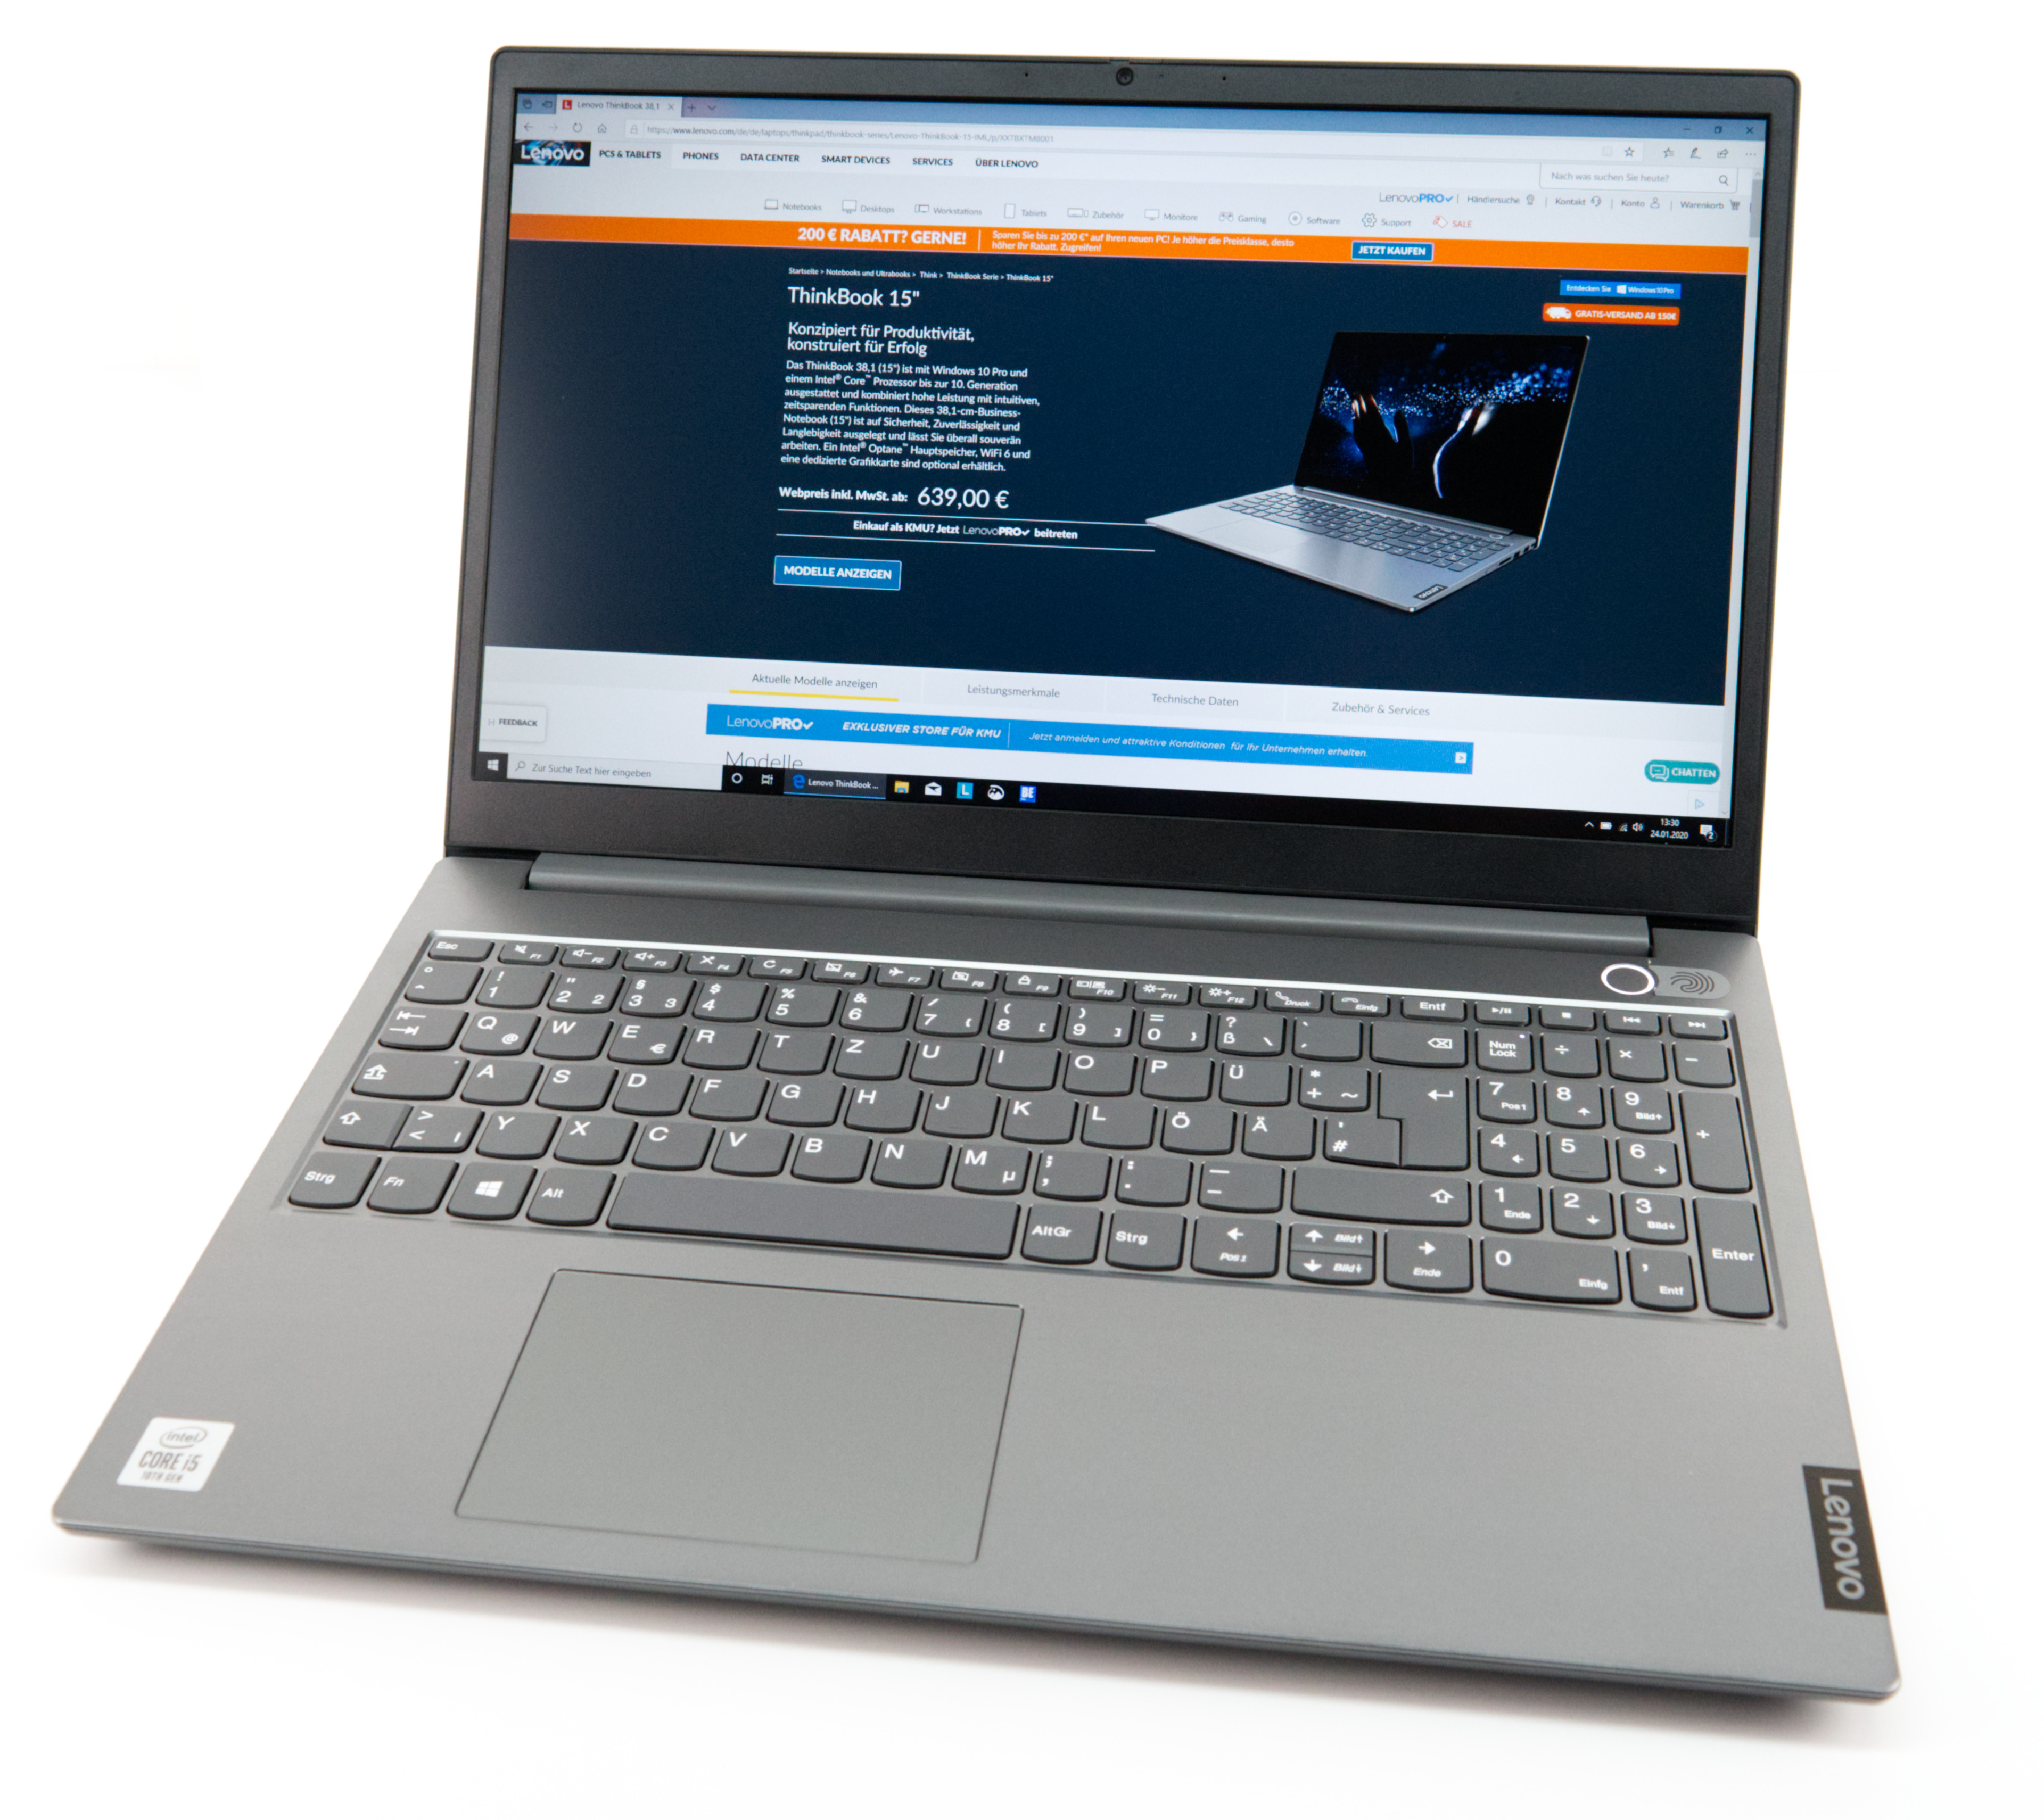 Lenovo Thinkbook 15 Im Test Preiswertes Officegerat Mit Comet Lake Soc Notebookcheck Com Tests